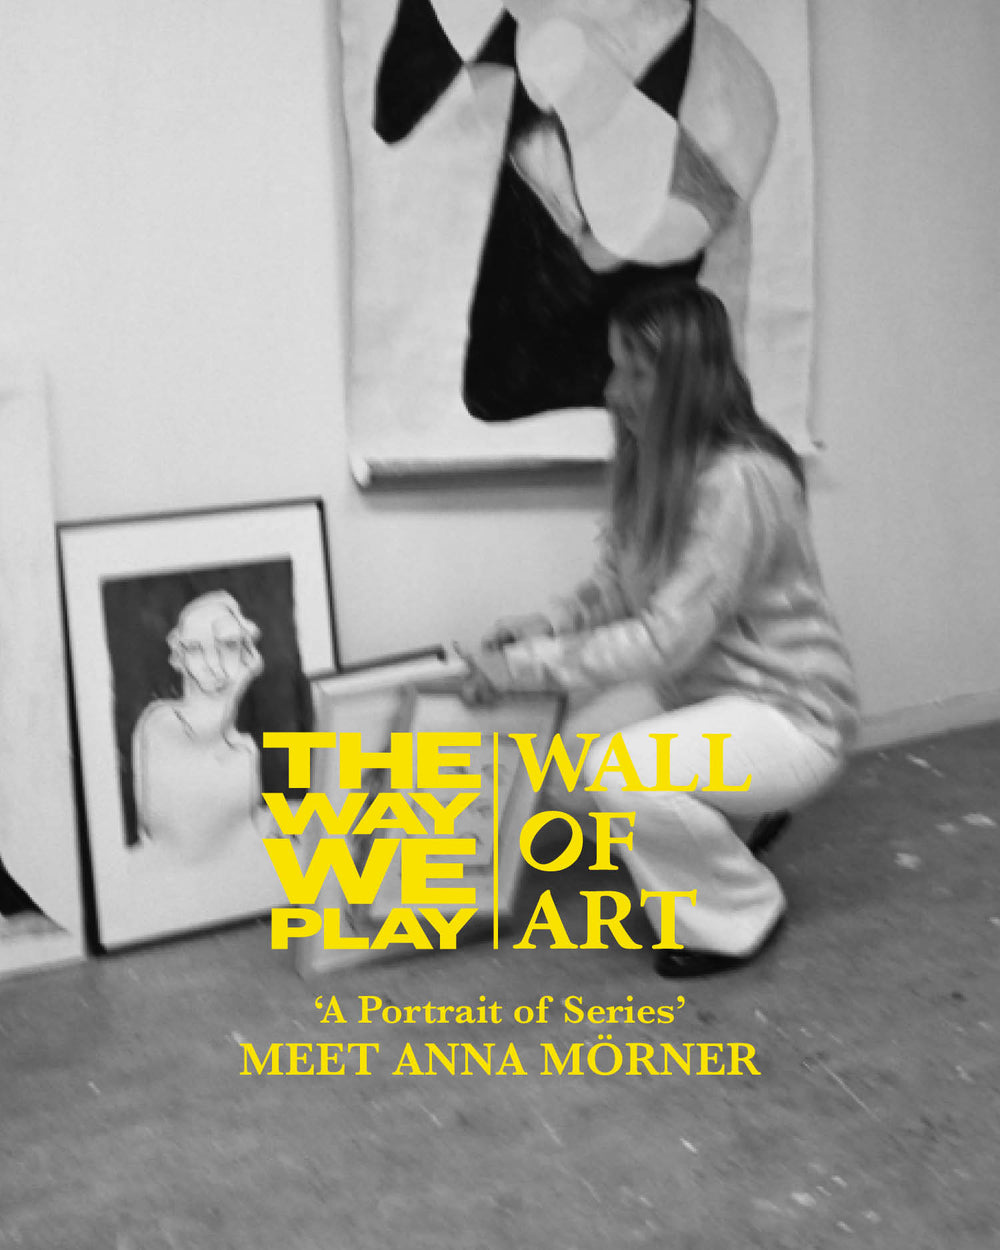 Wall of Art x TWWP, A portrait of: Anna Mörner